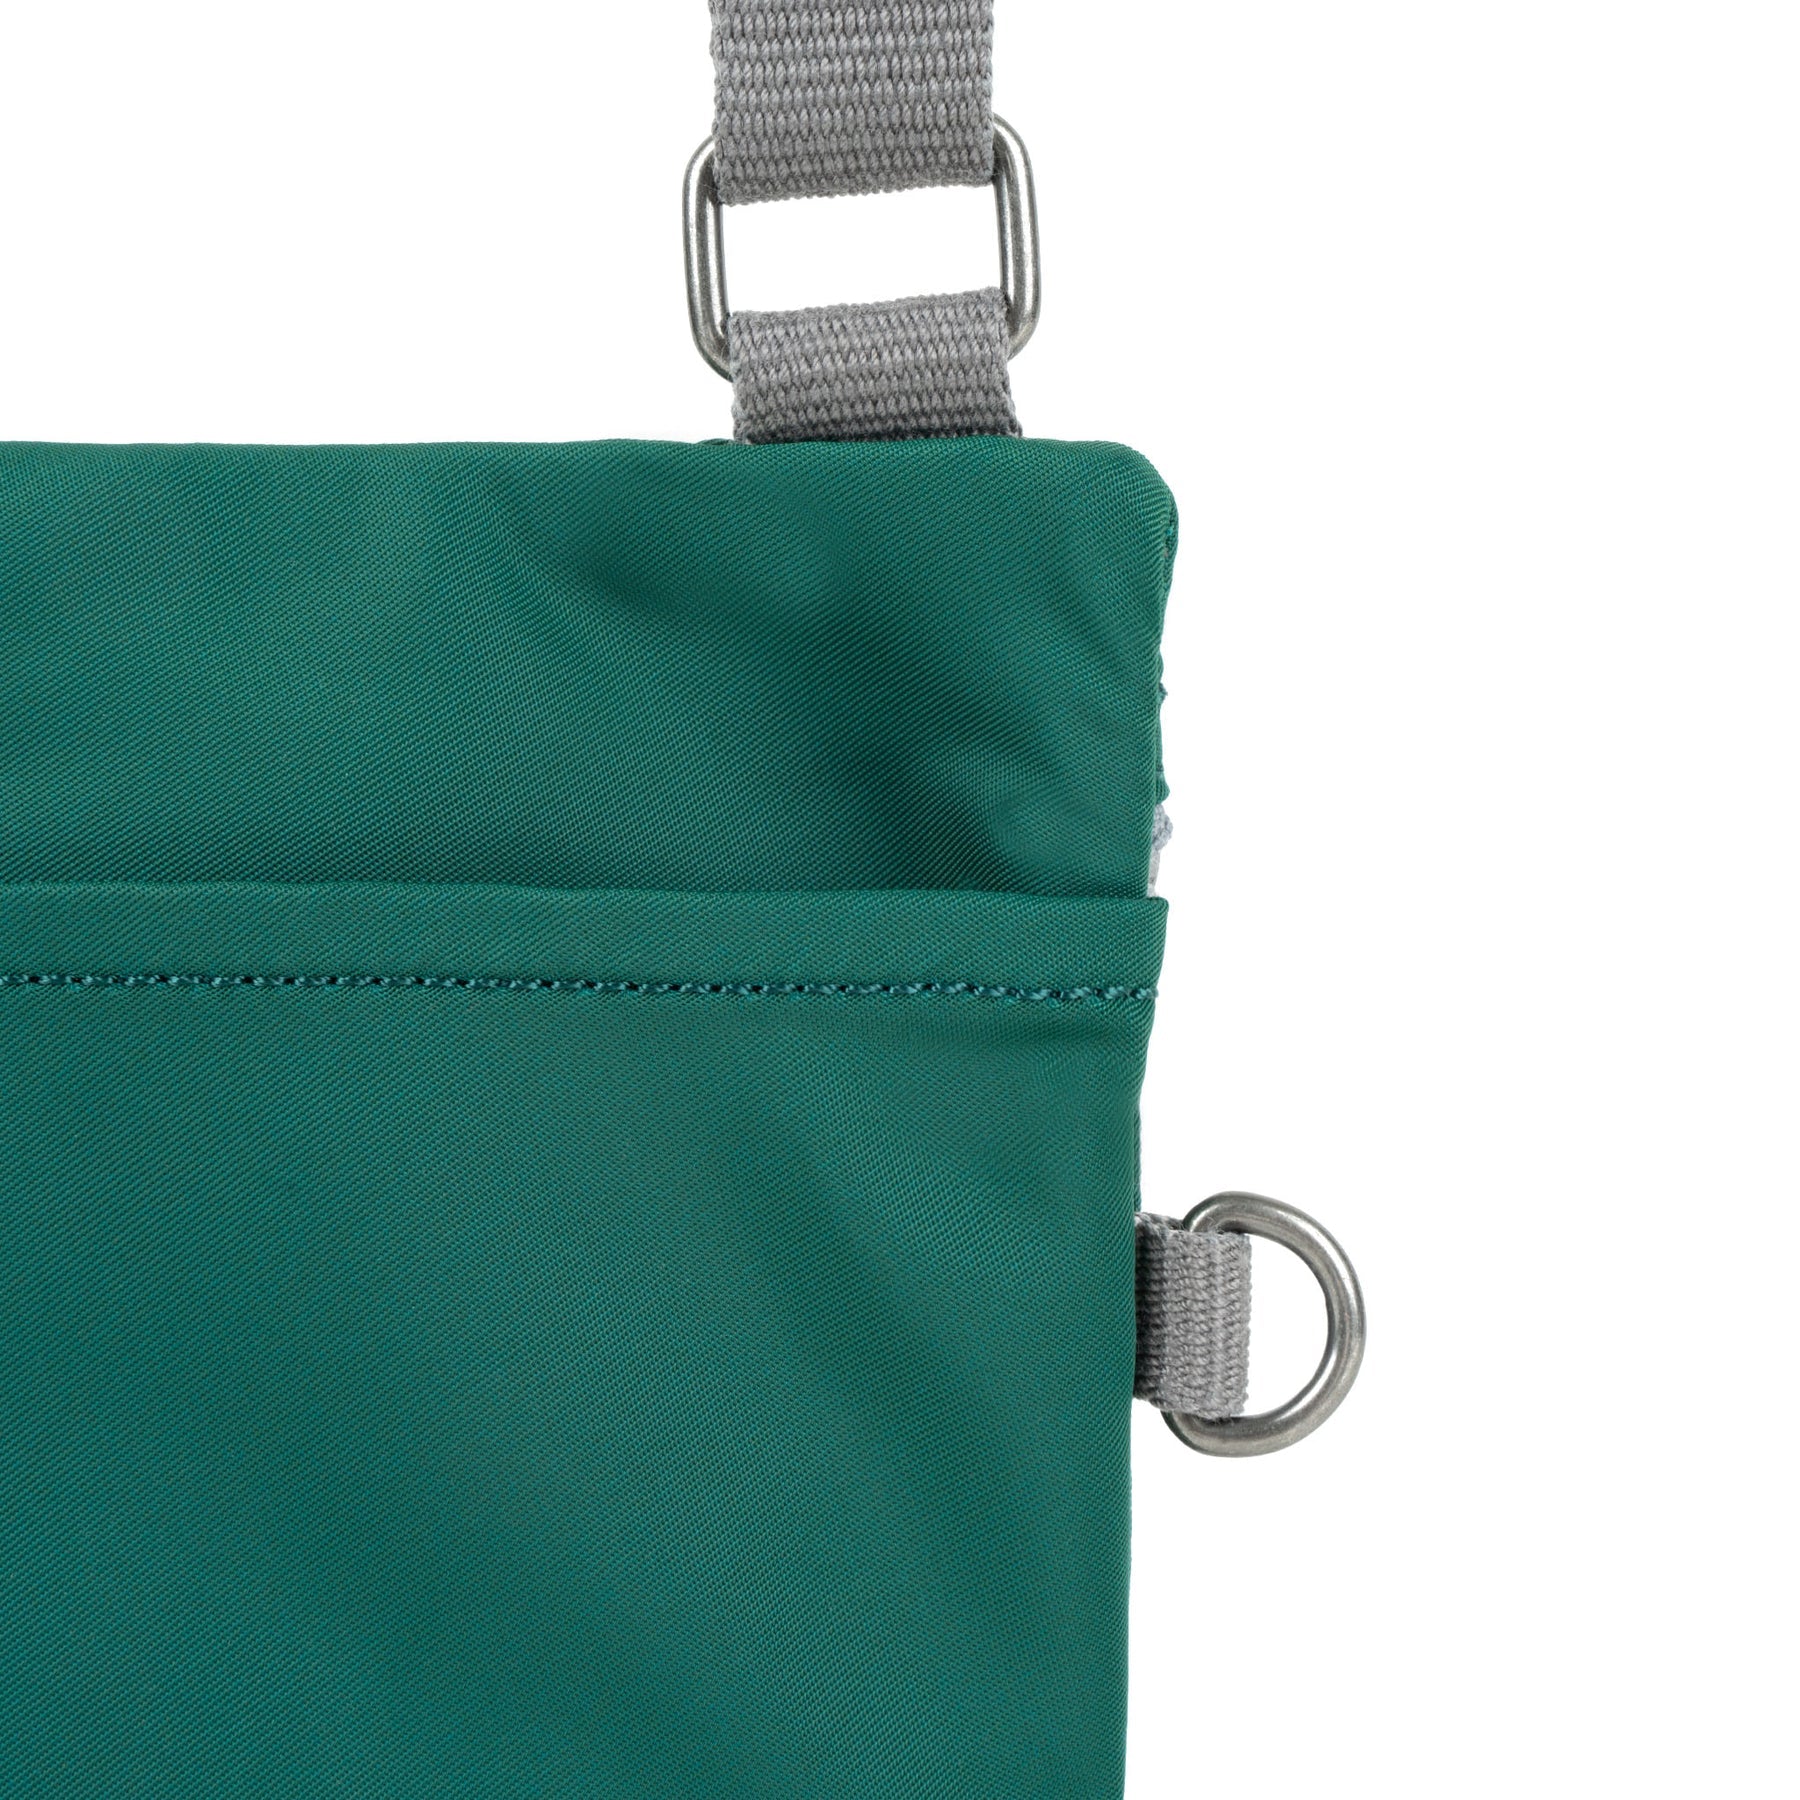 ROKA Chelsea Teal Recycled Nylon Bag - OS